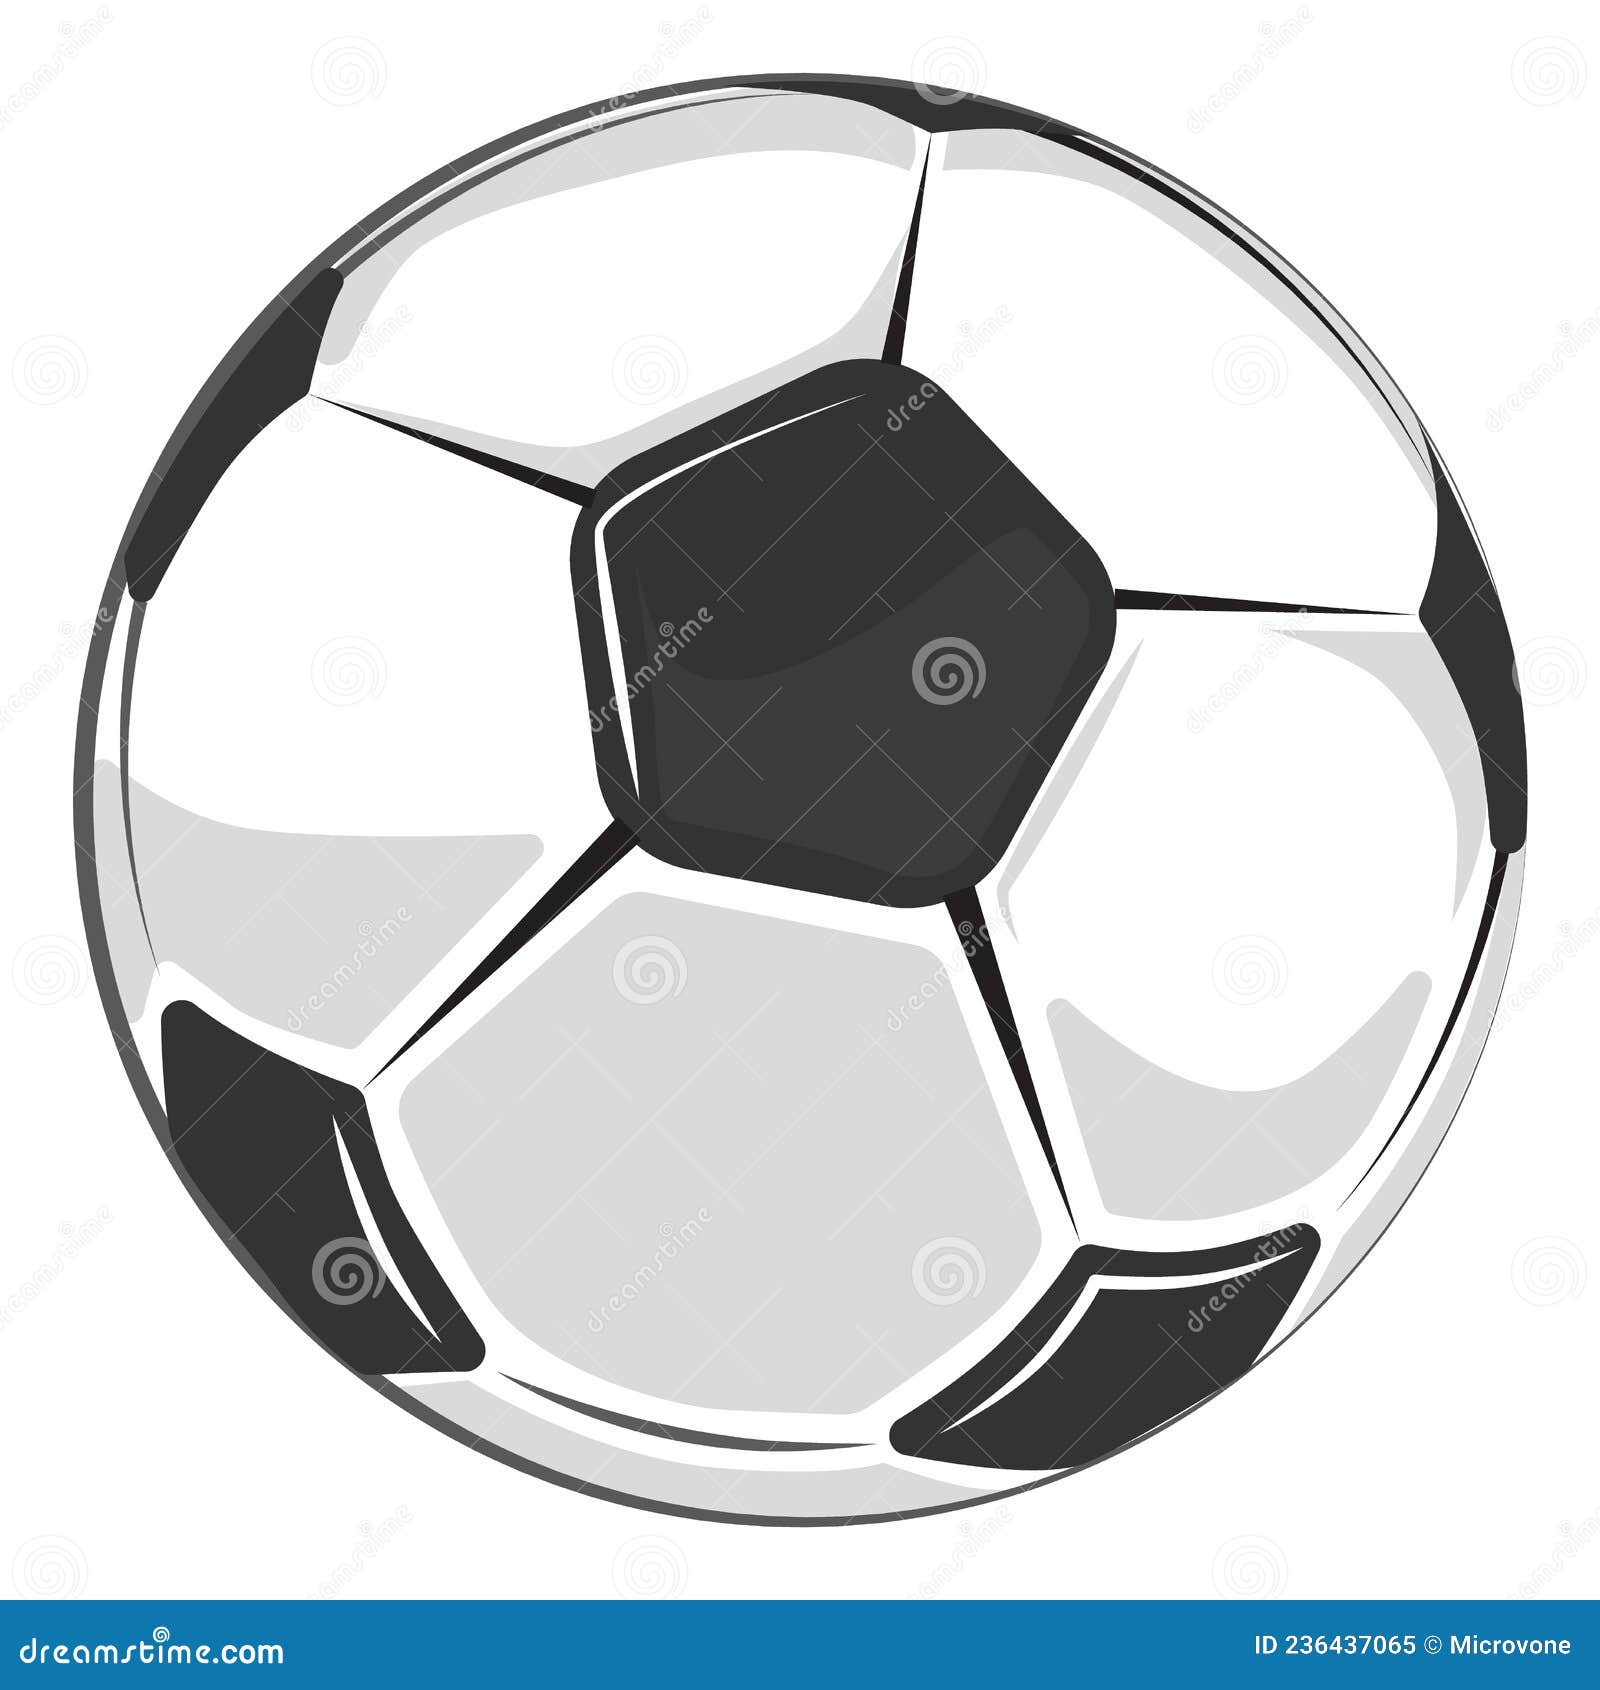 Dibujos animados de pelota de fútbol fotografías e imágenes de alta  resolución - Alamy